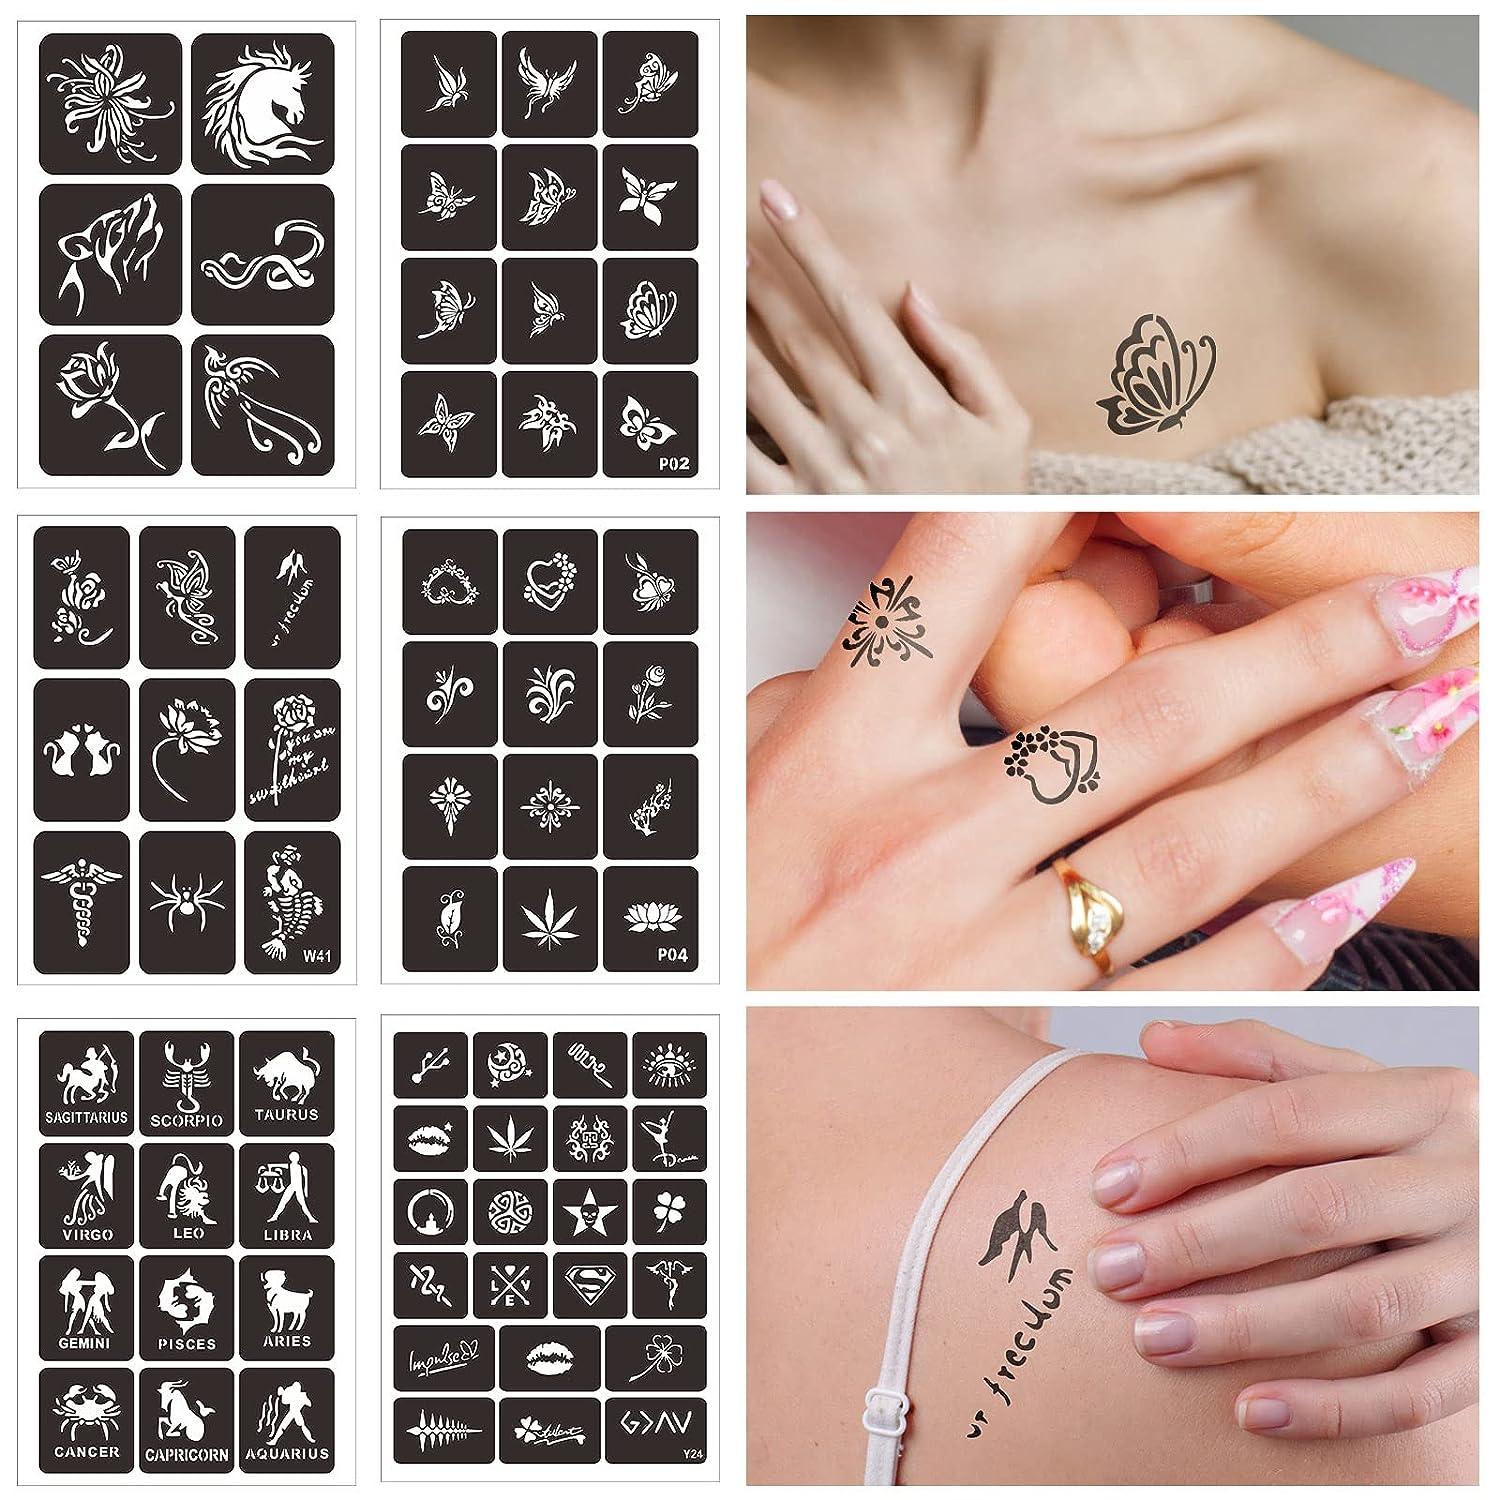 14 Pretty Henna Tattoo Patterns to Inspire You